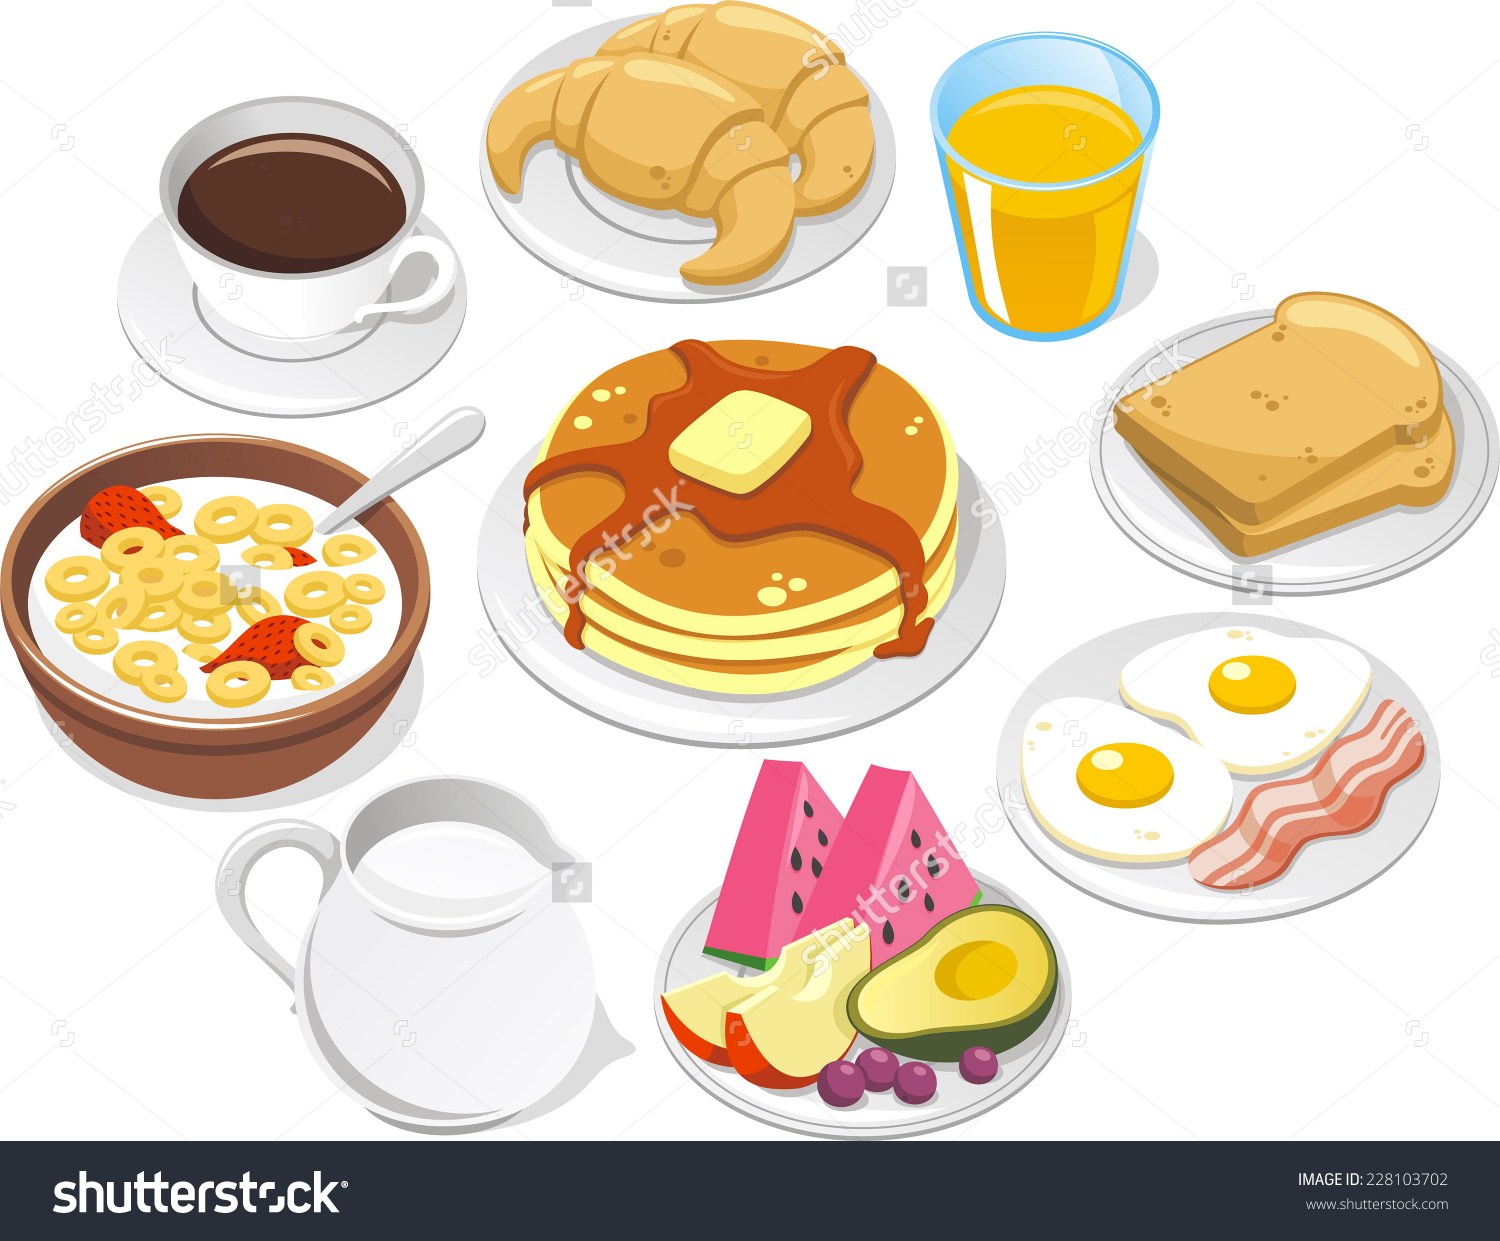 Breakfast Clipart cartoon